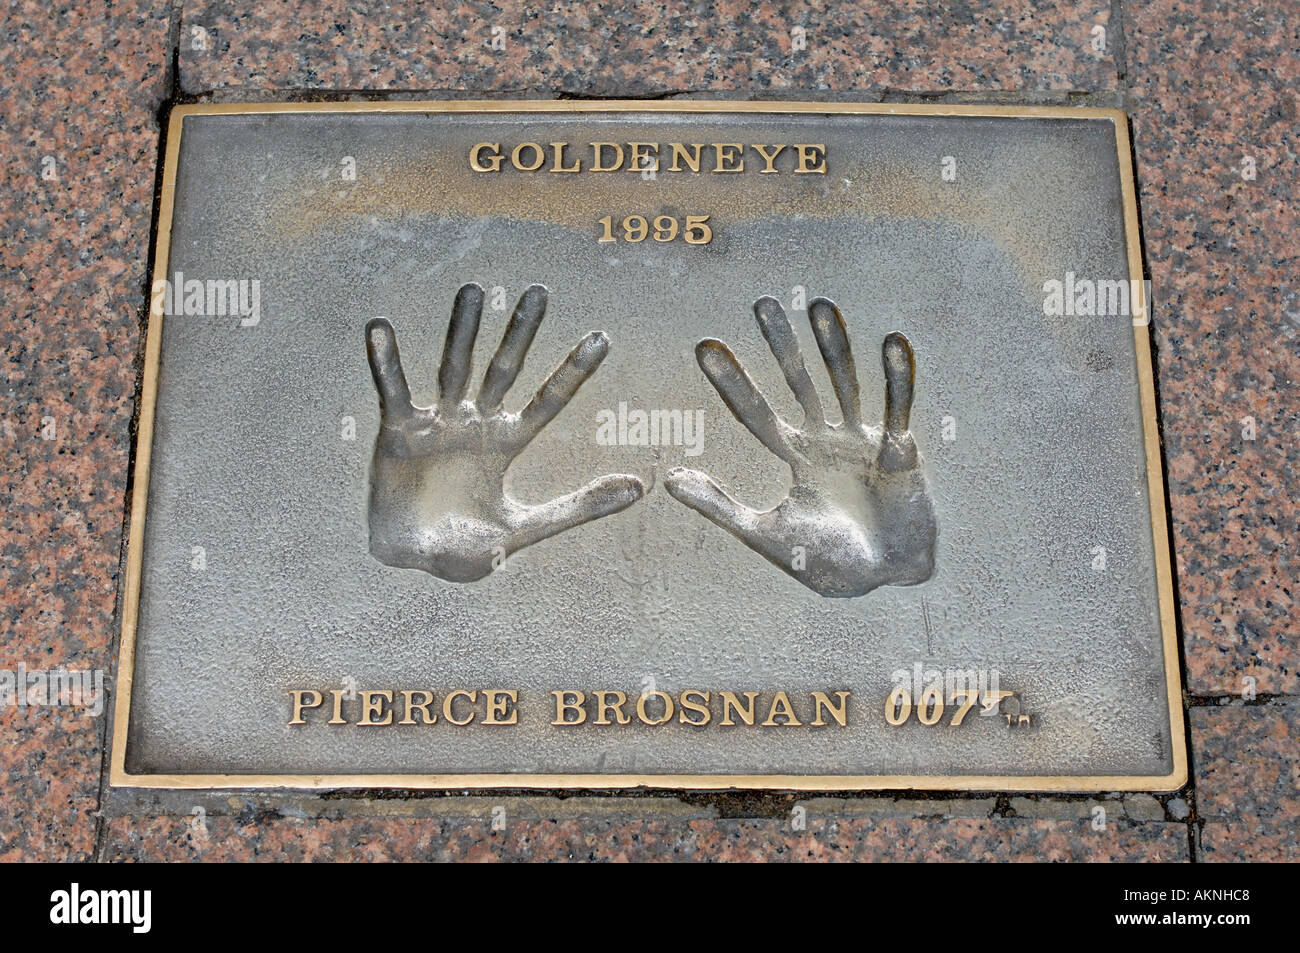 Pierce Brosnan marciapiede stampe a mano per Goldeneye 1995 Leicester Square Londra Inghilterra REGNO UNITO Foto Stock